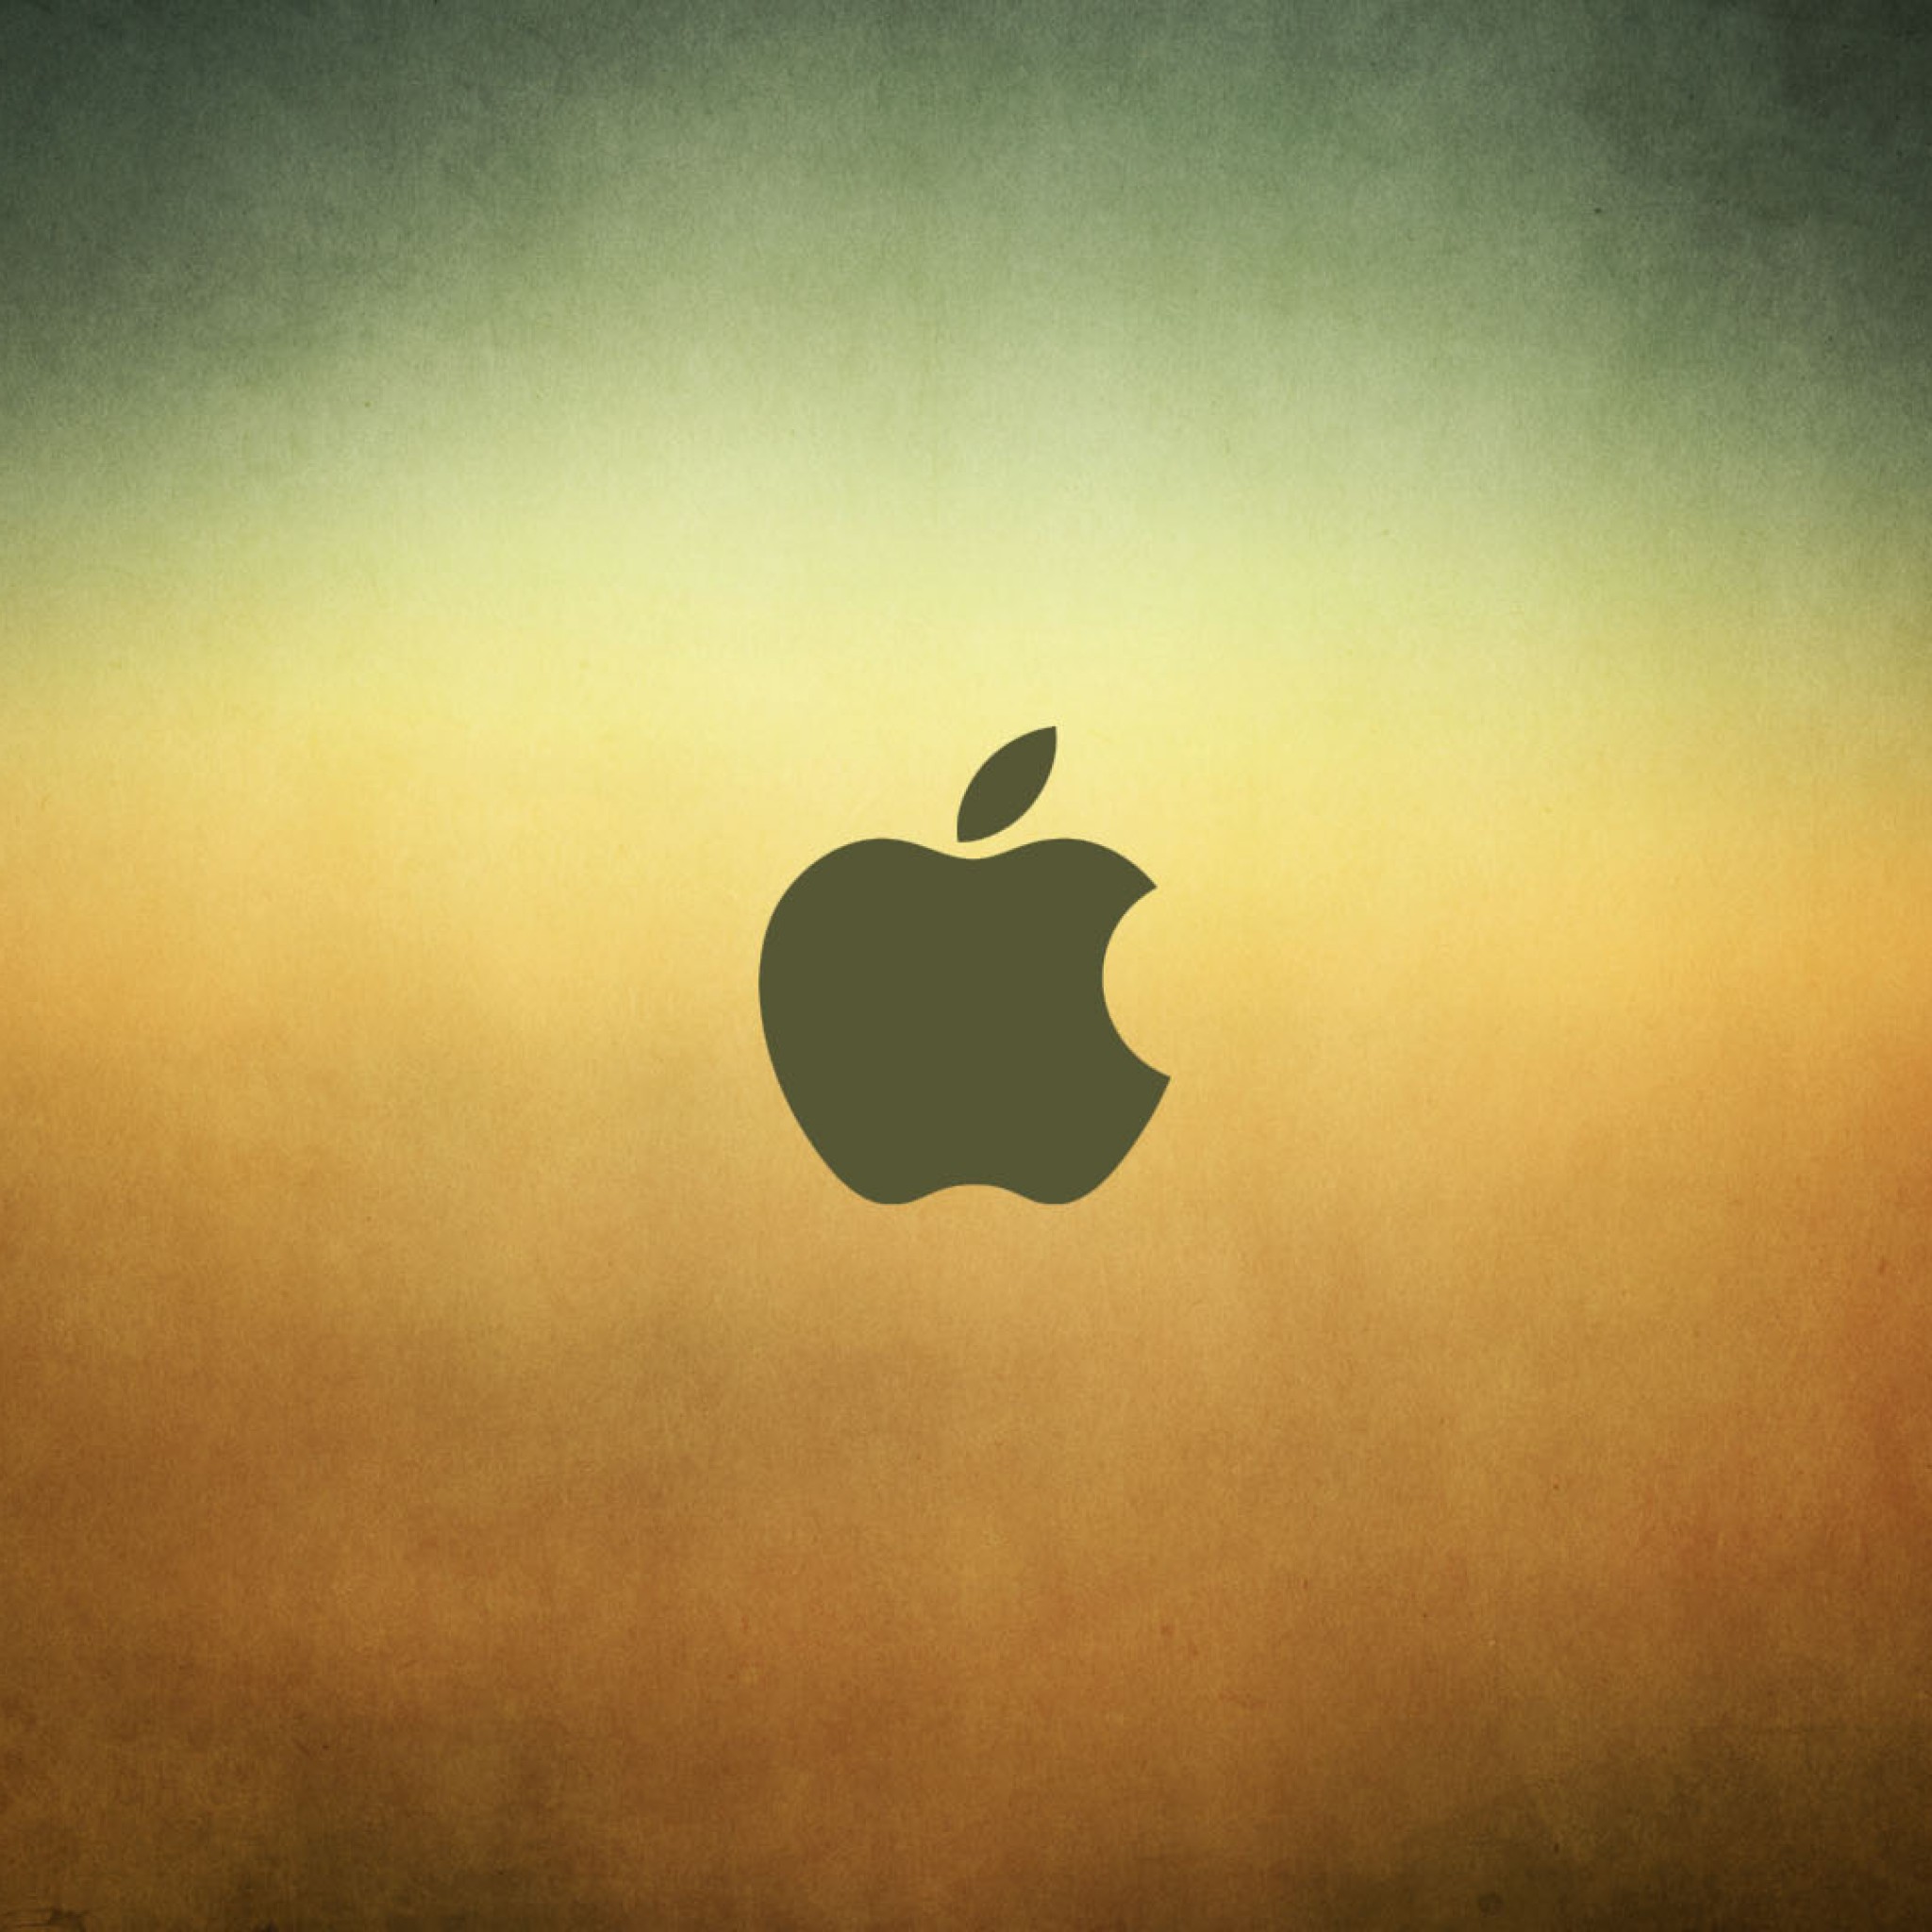 Apple Hd iPad Air Wallpaper Download iPhone Wallpapers iPad